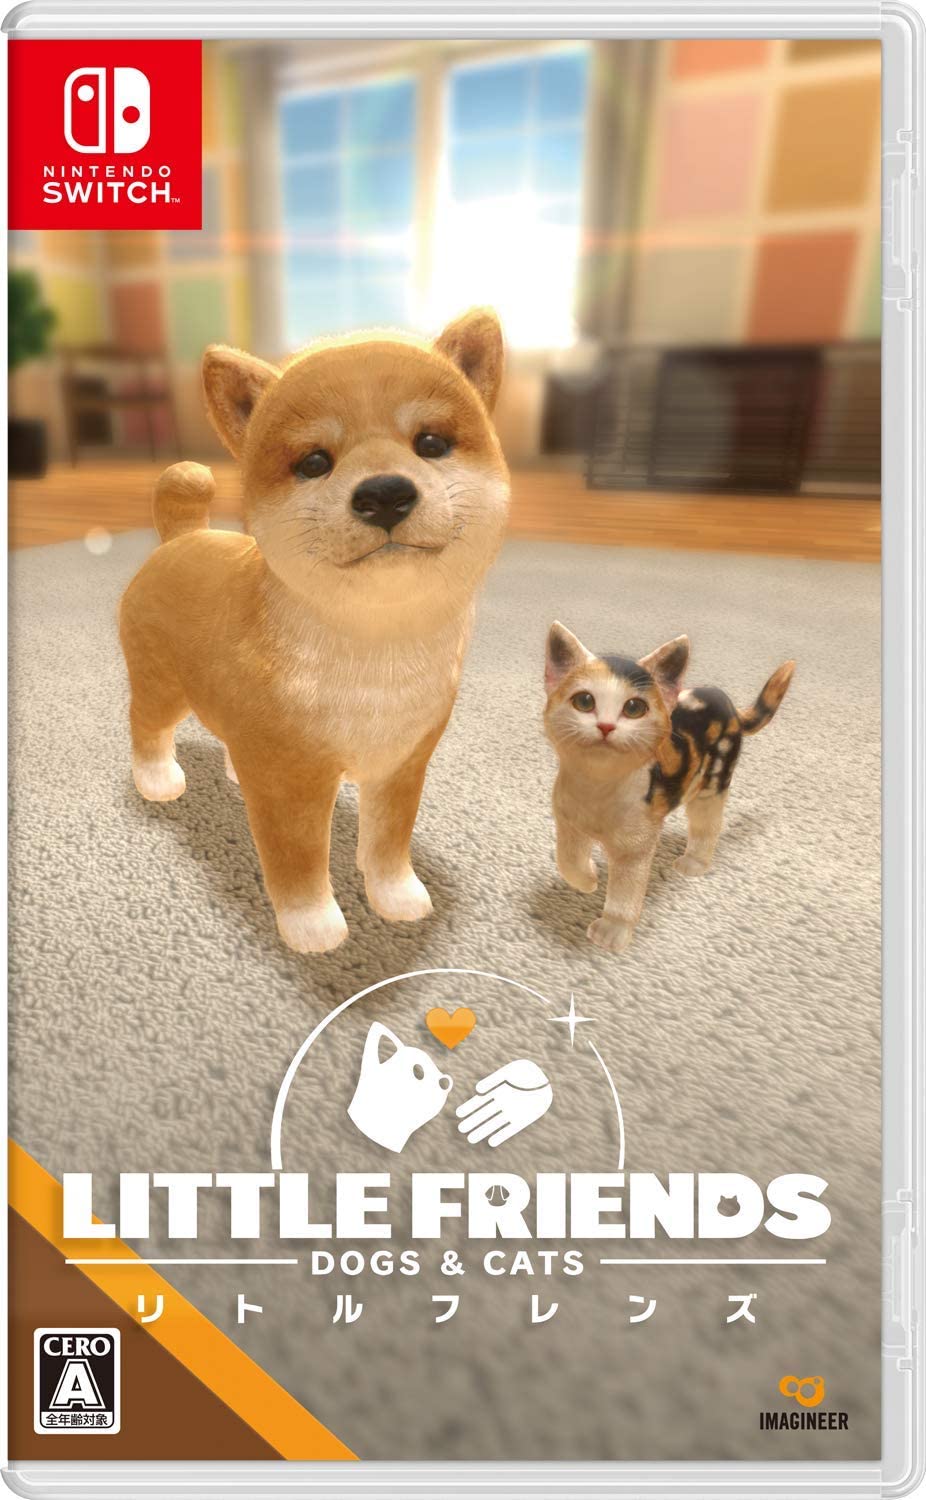 LITTLE FRIENDS (リトルフレンズ) – DOGS & CATS (ドッグス&キャッツ) –